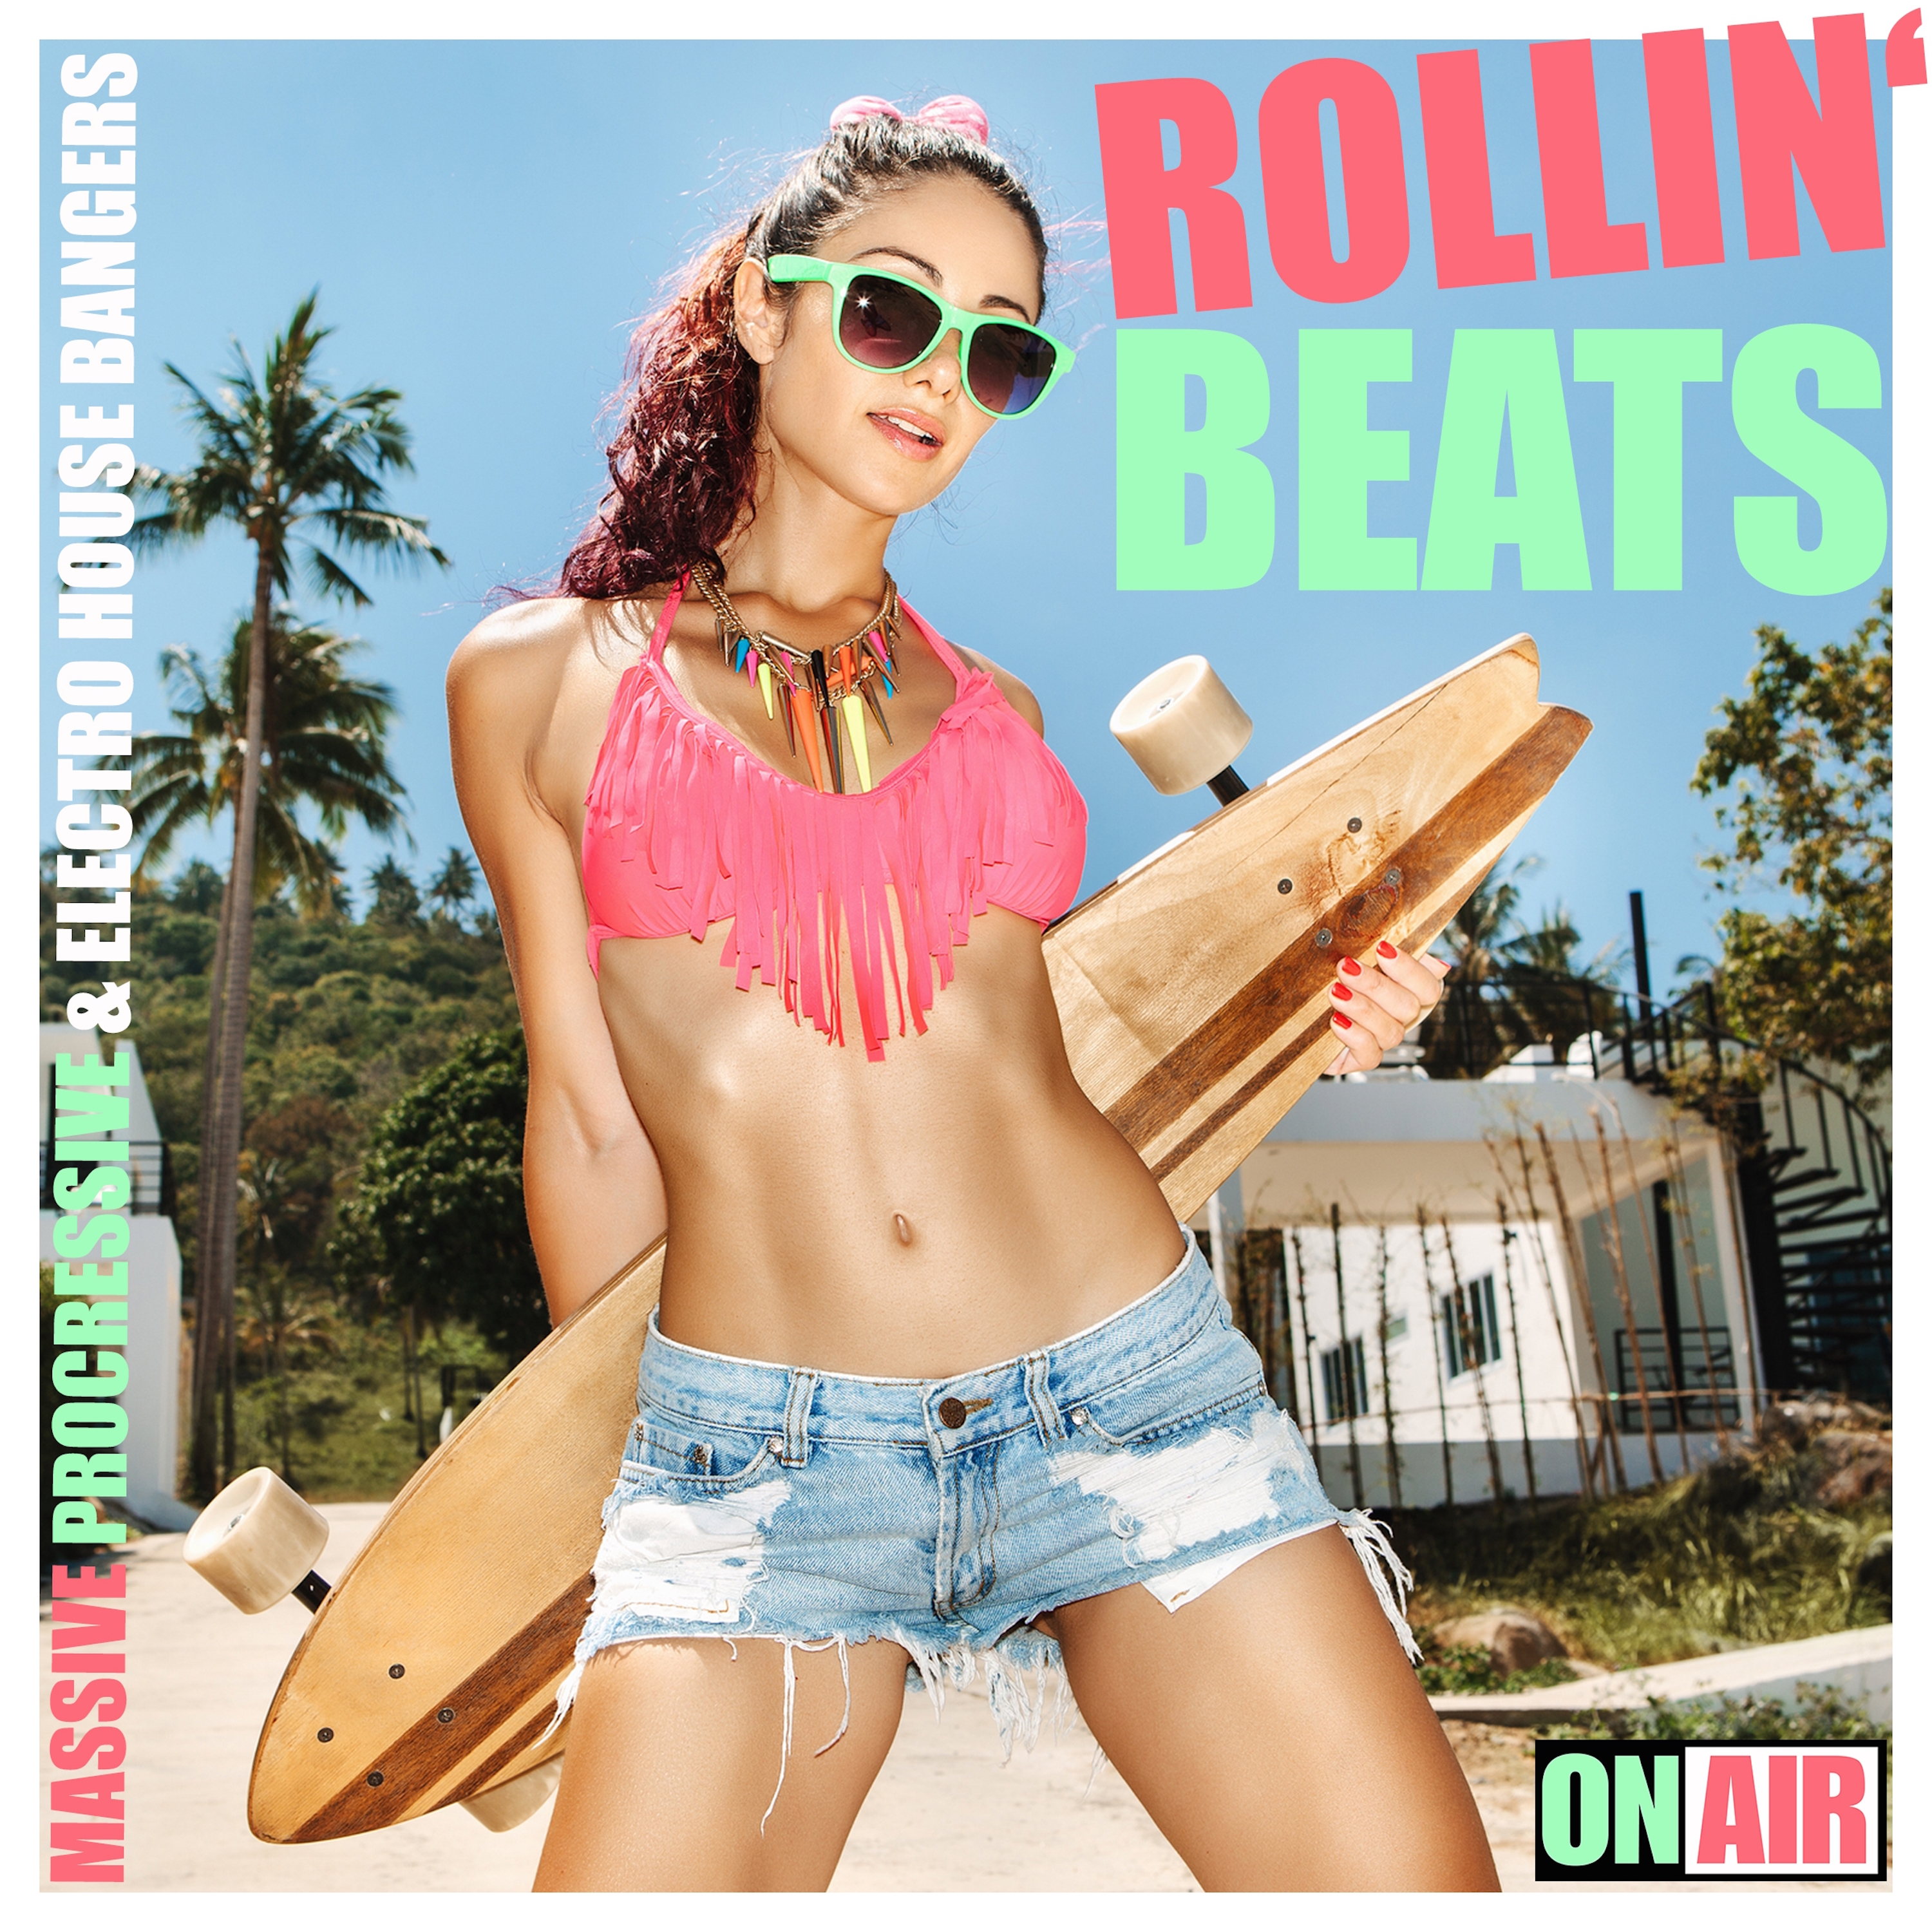 Rollin' Beats (Massive Progressive House & Electro House Bangers)